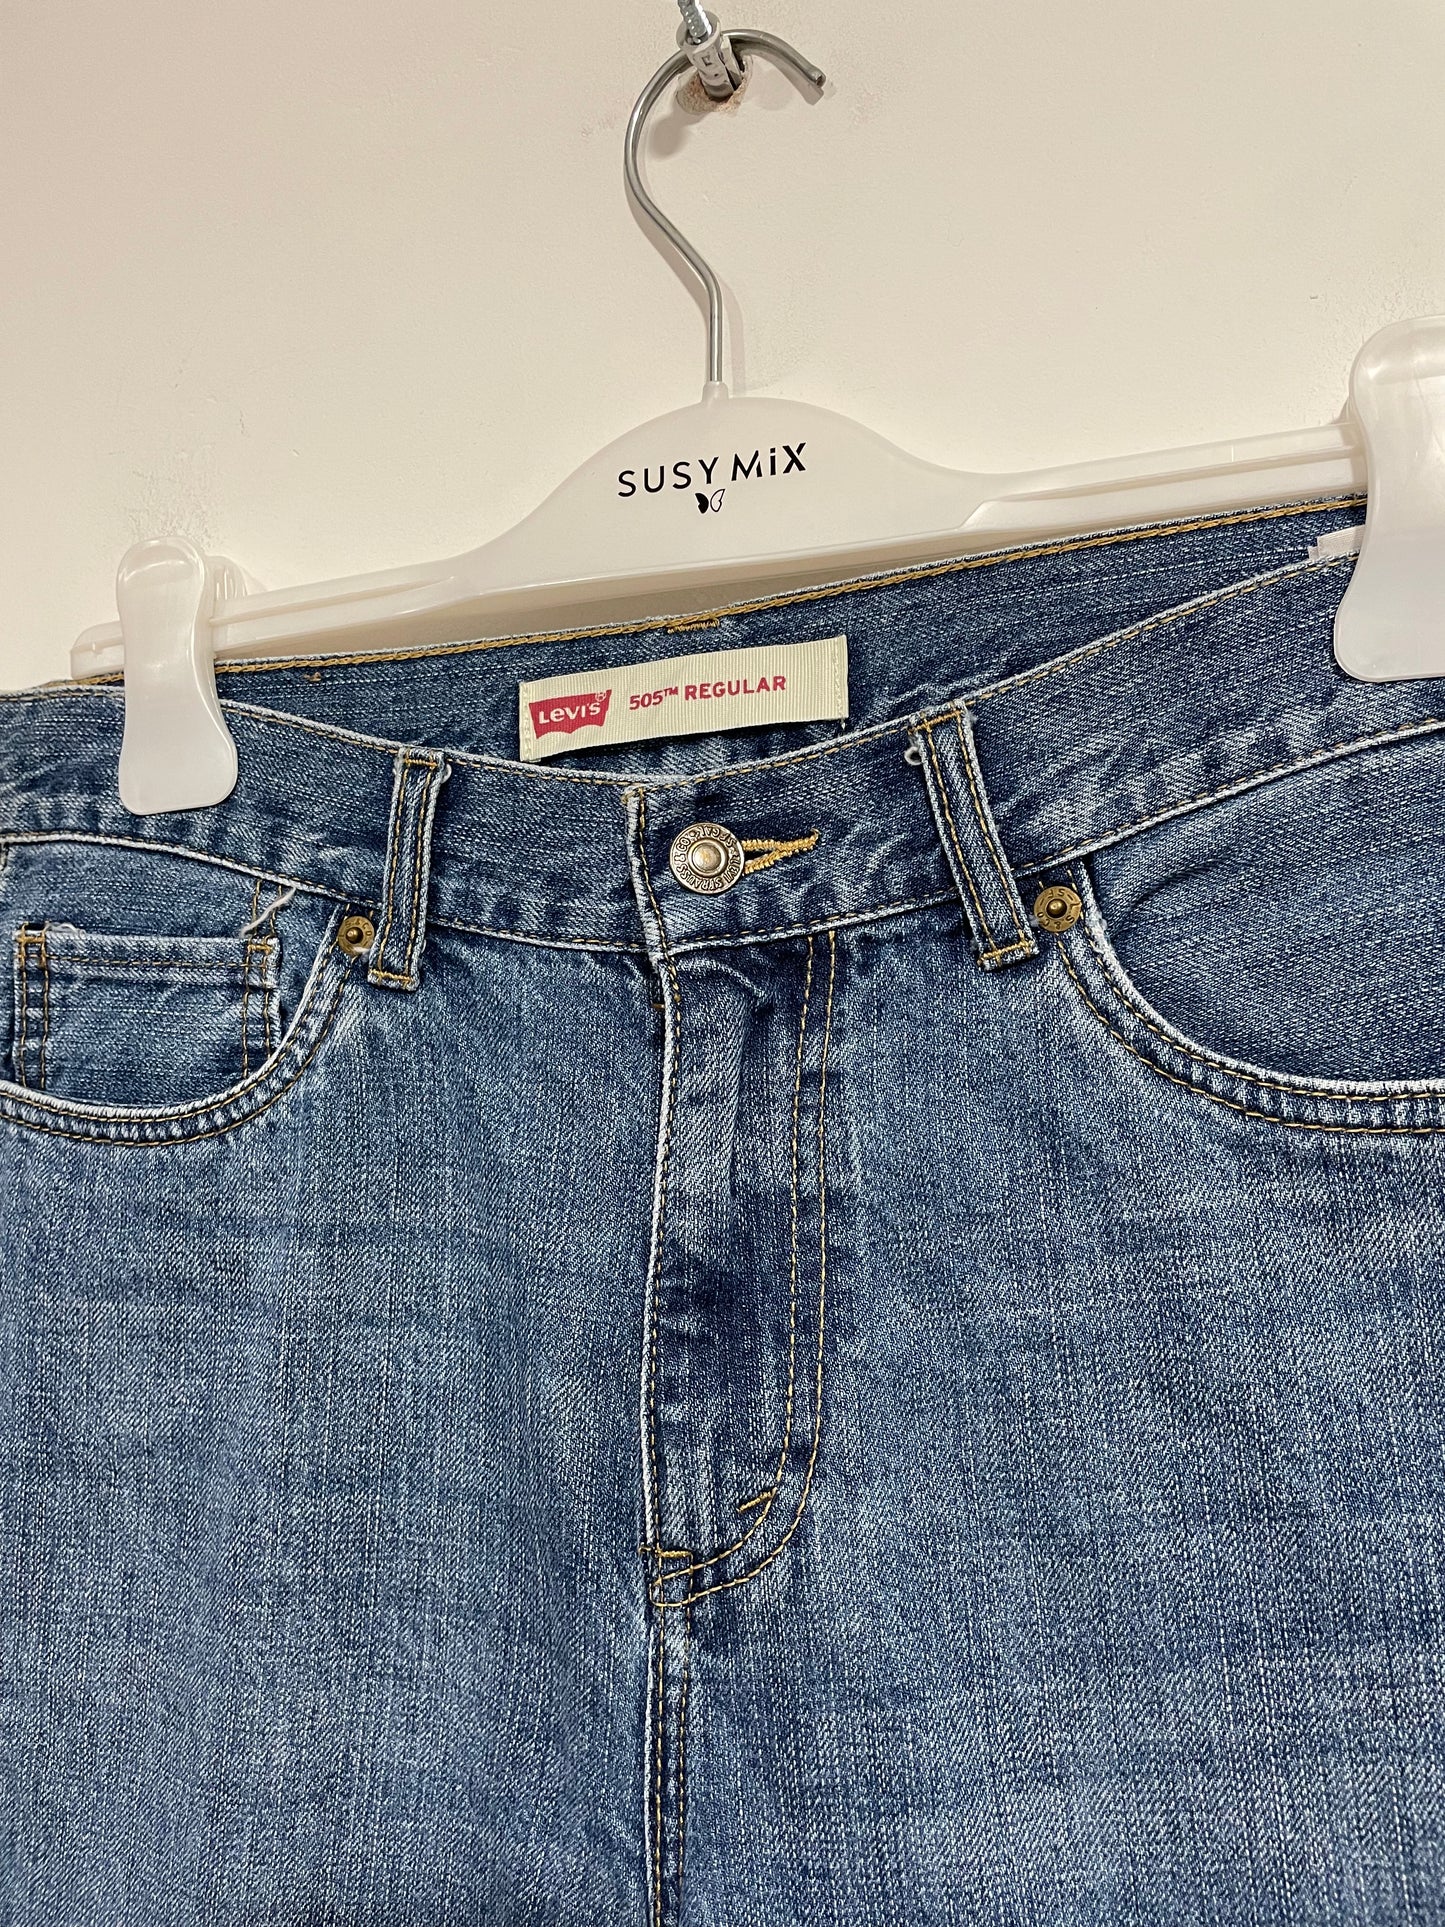 Shorts Levi’s 505 regular in jeans (MR593)